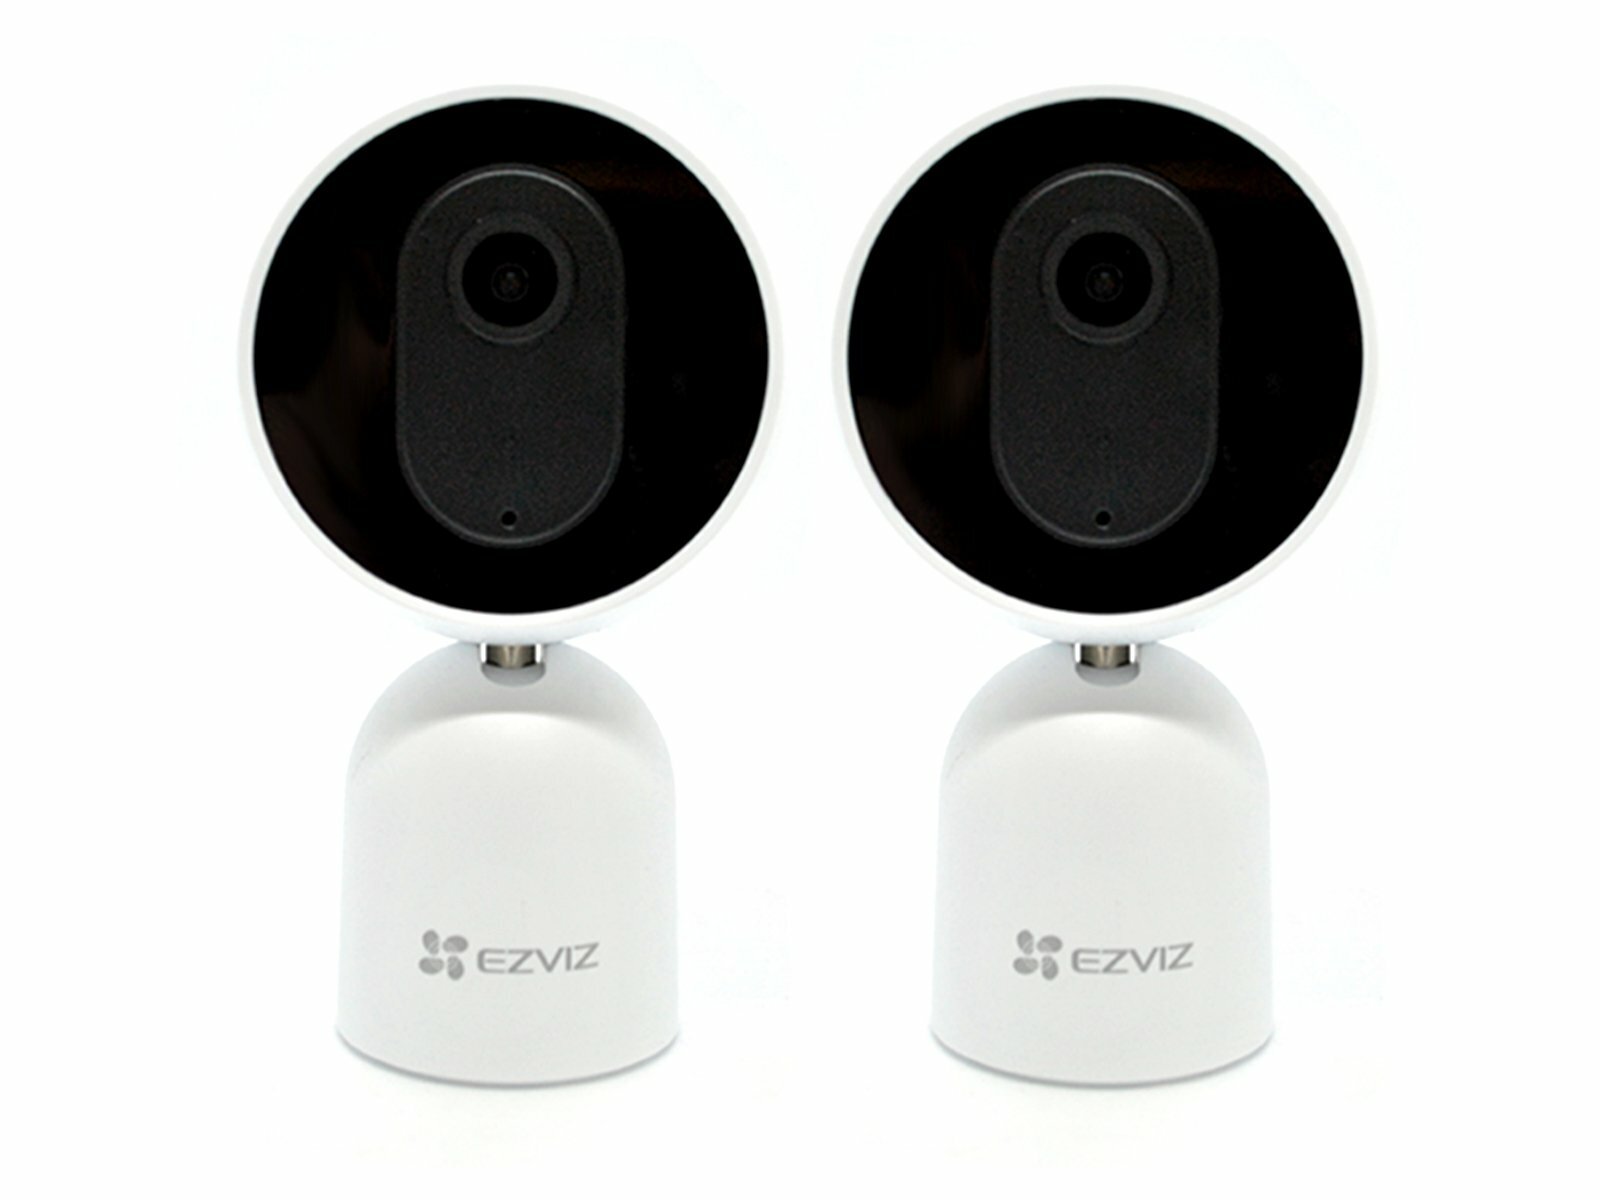 Комплект WiFi видеонаблюдения для дома и офиса Ezviz C1T Full HD 1080p (2 шт.)